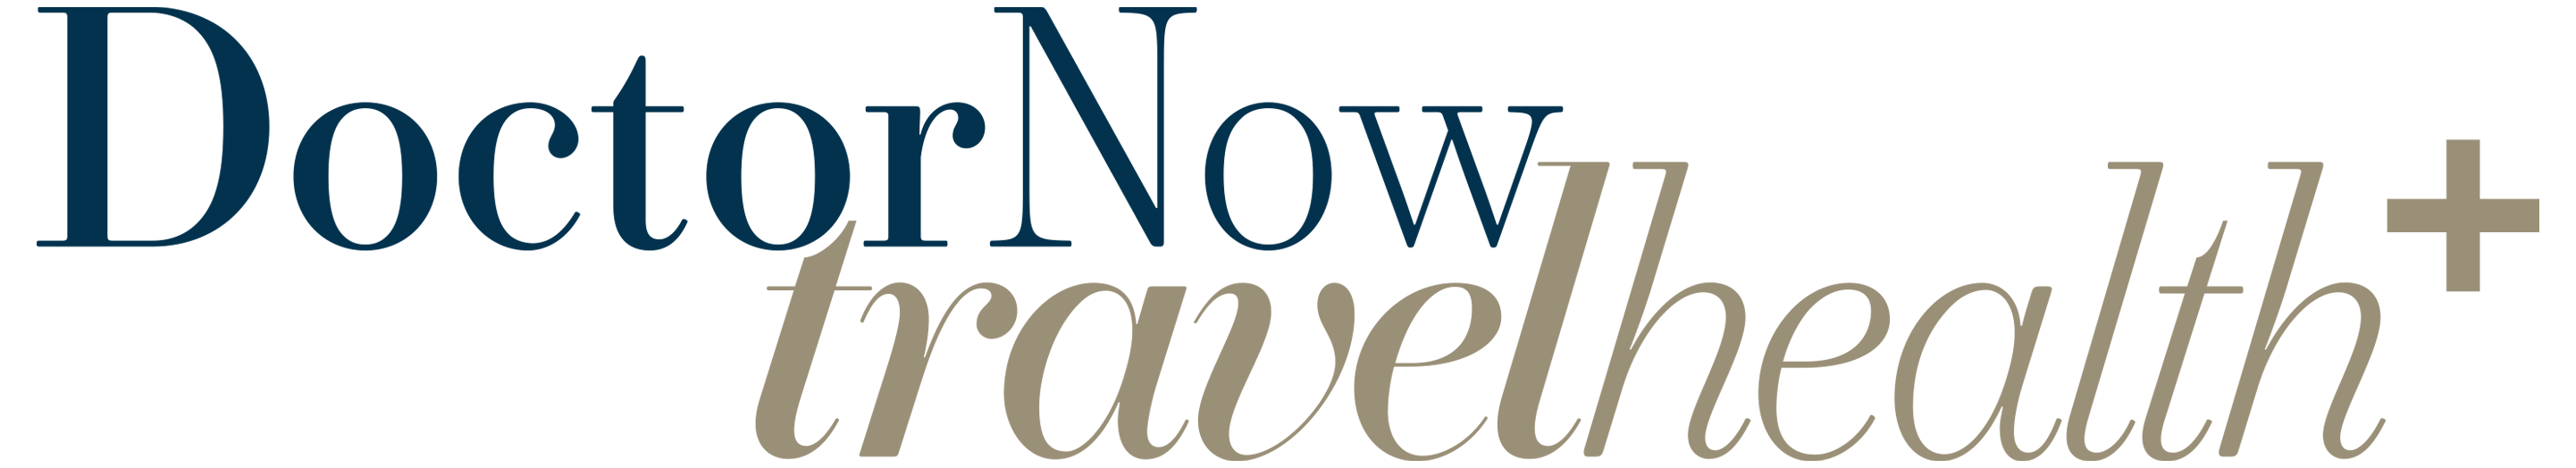 DoctorNow travelhealth plus logo